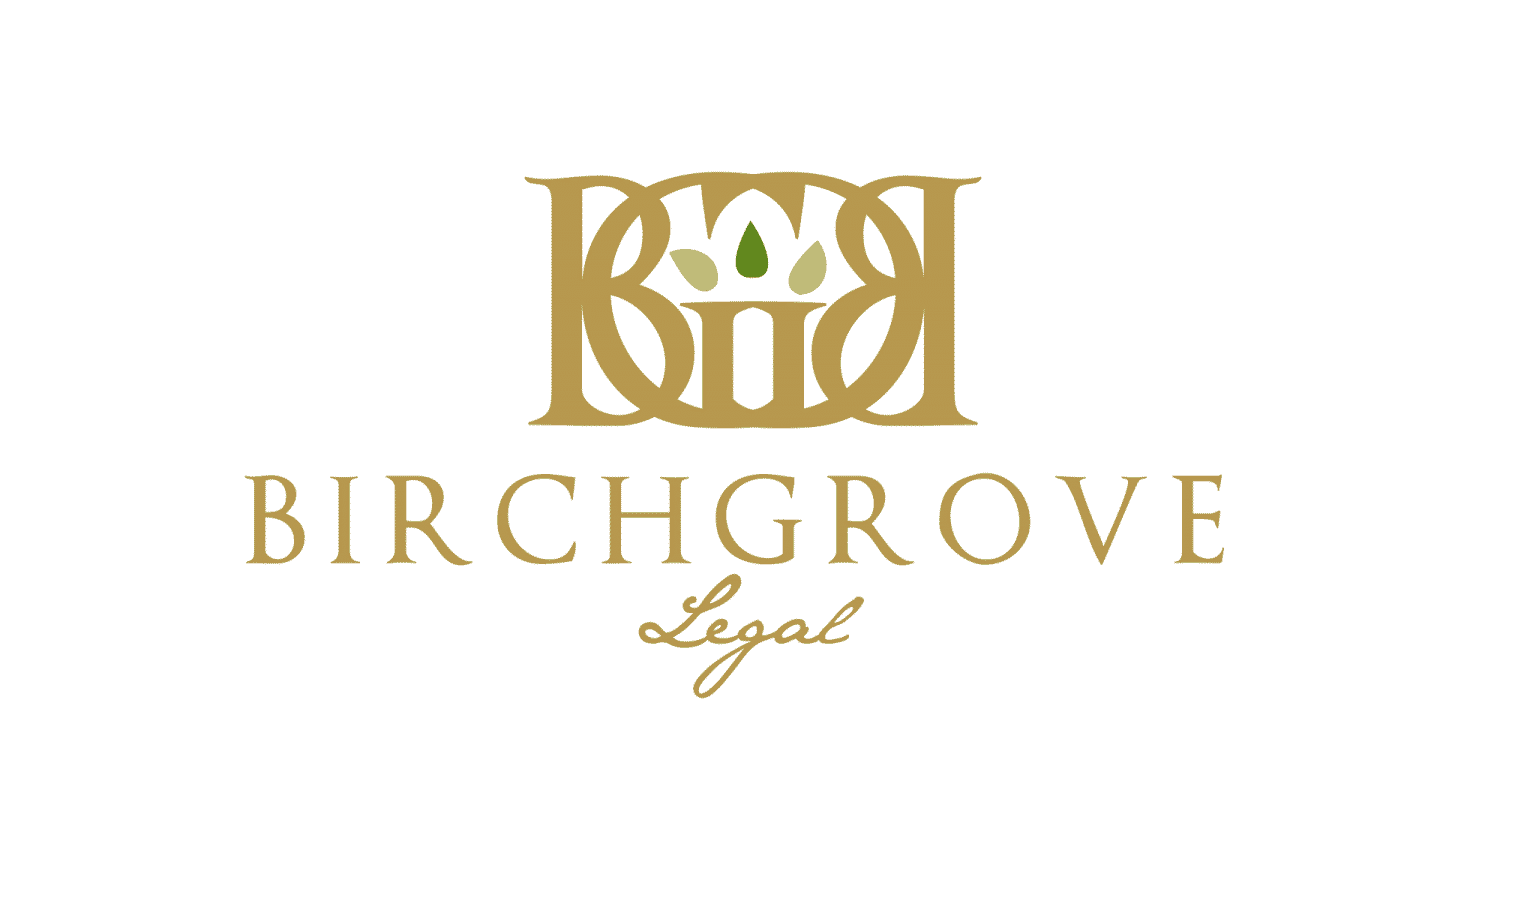 Birchgrove Legal 1536x916